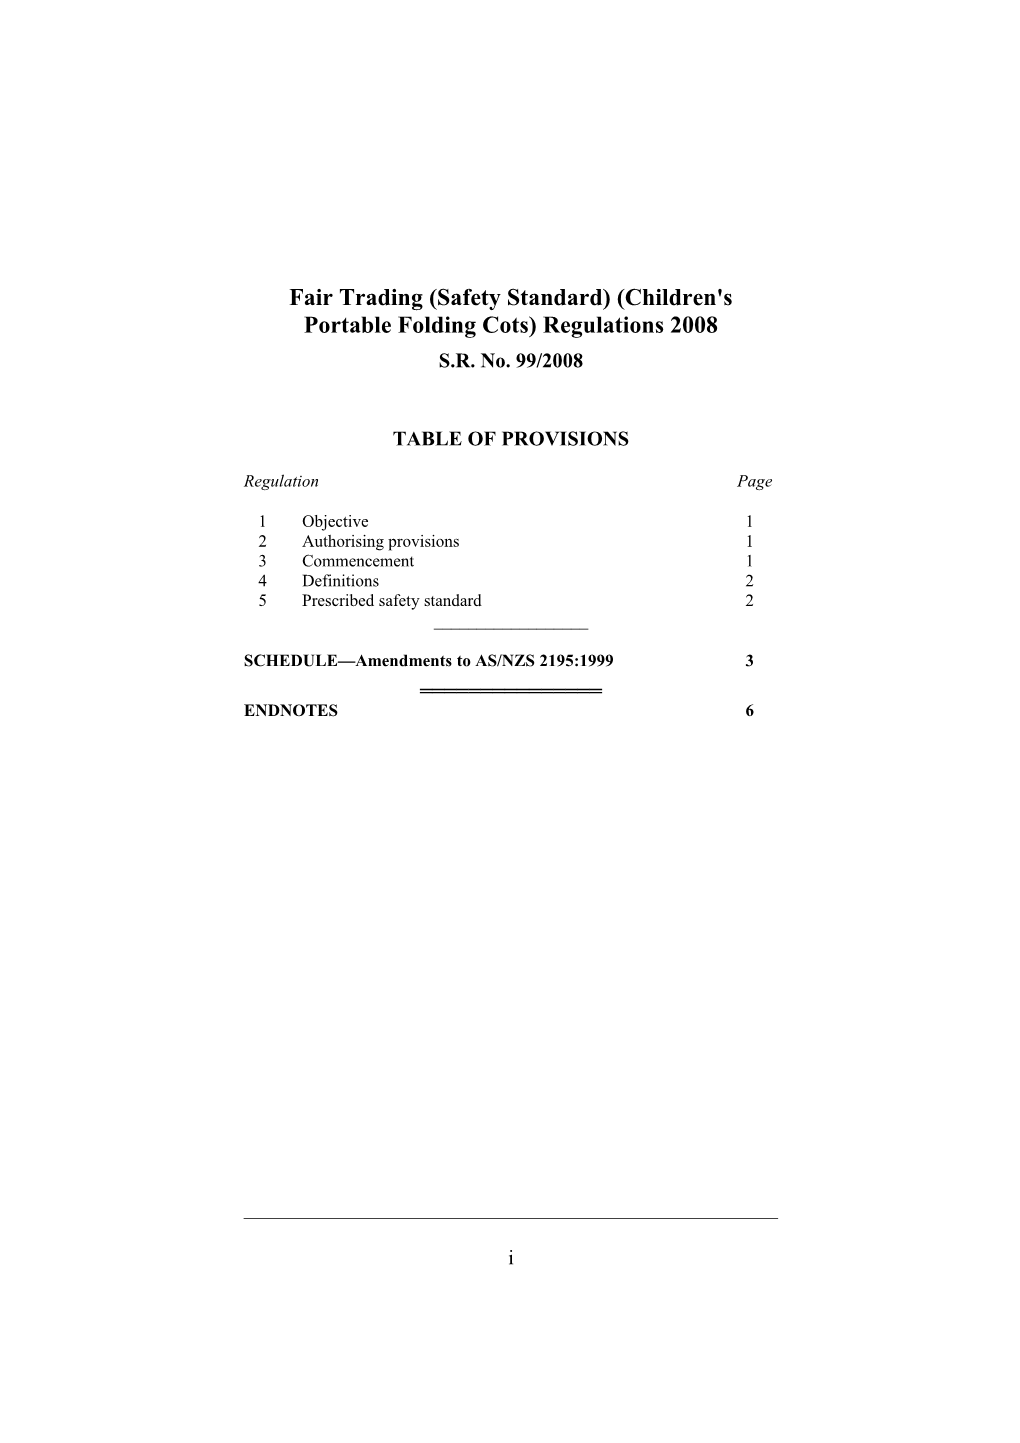 Fair Trading (Safety Standard) (Children's Portable Folding Cots) Regulations 2008